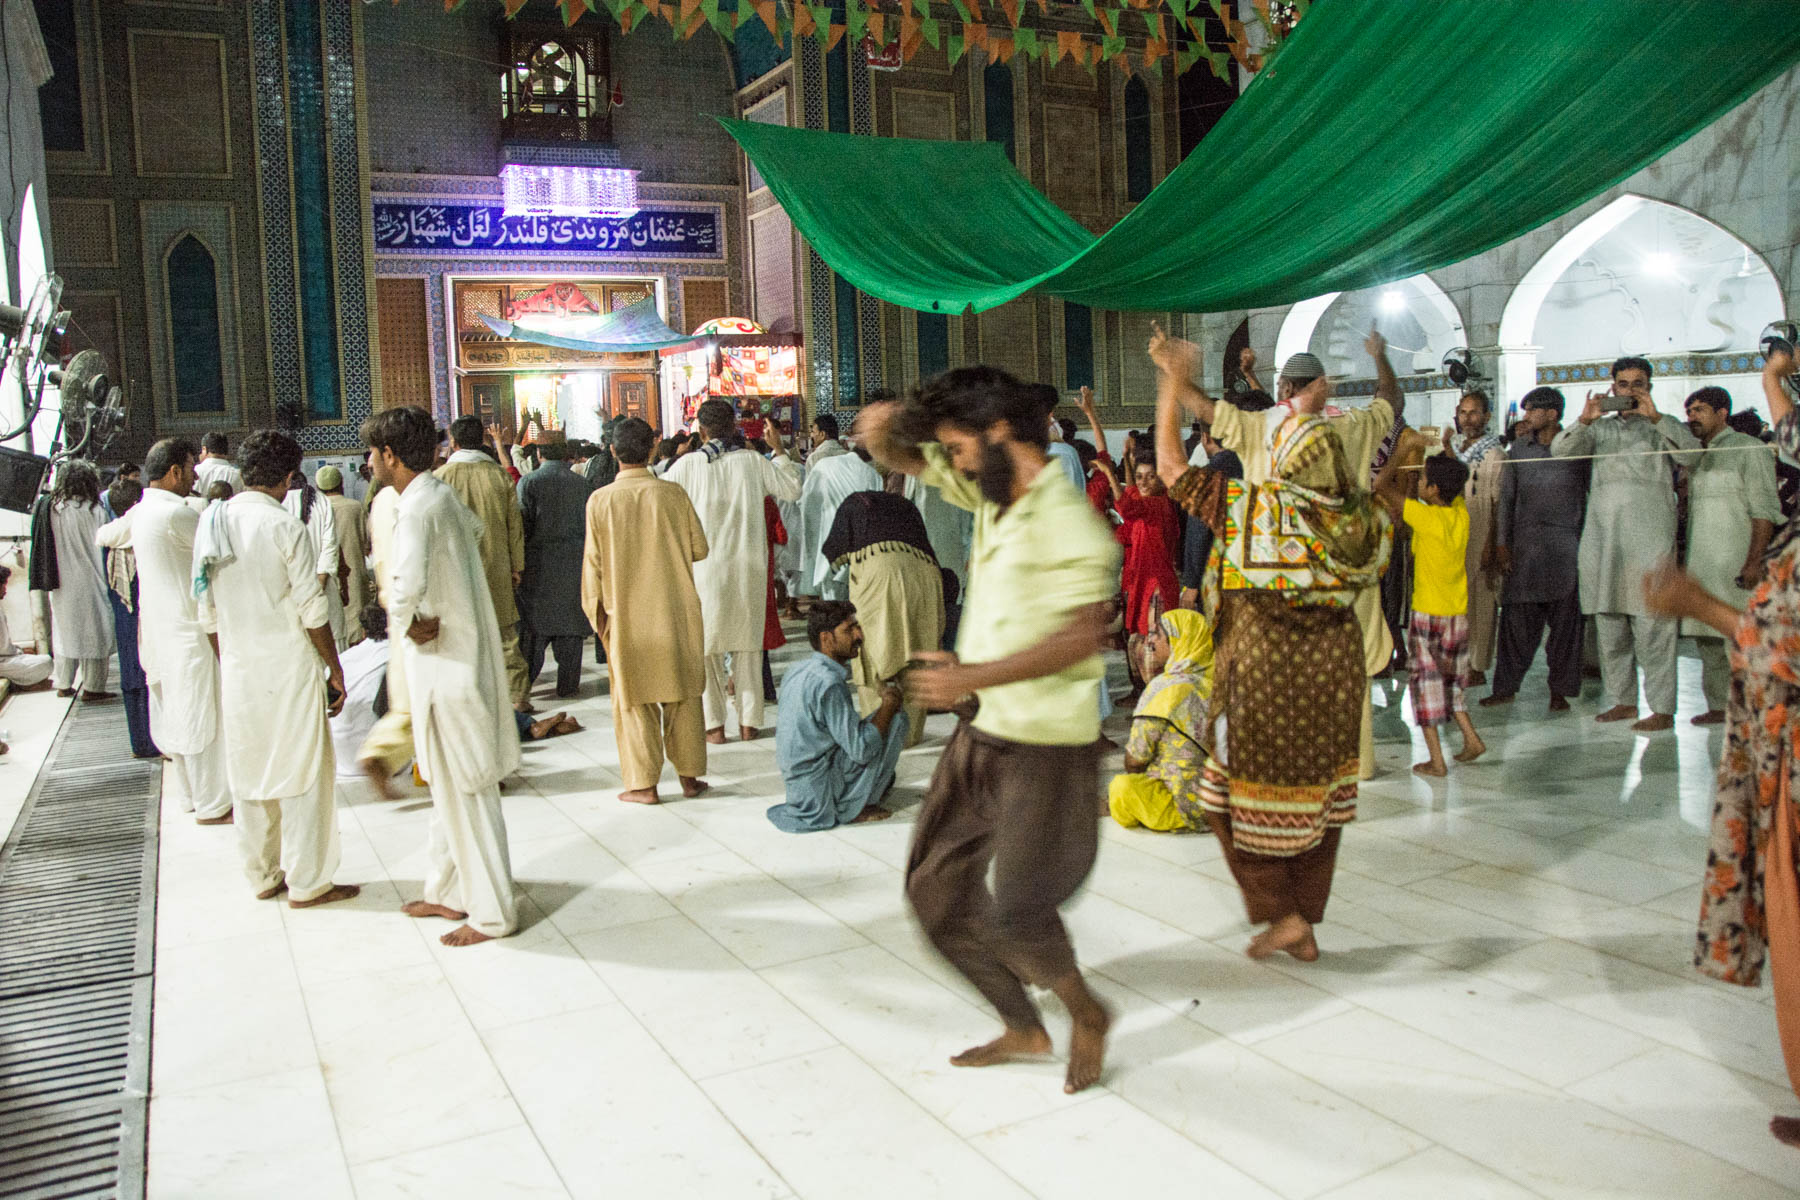 Sufi dancing at the Lal Shahbaz Qalandar shrine in Sehwan, Pakistan